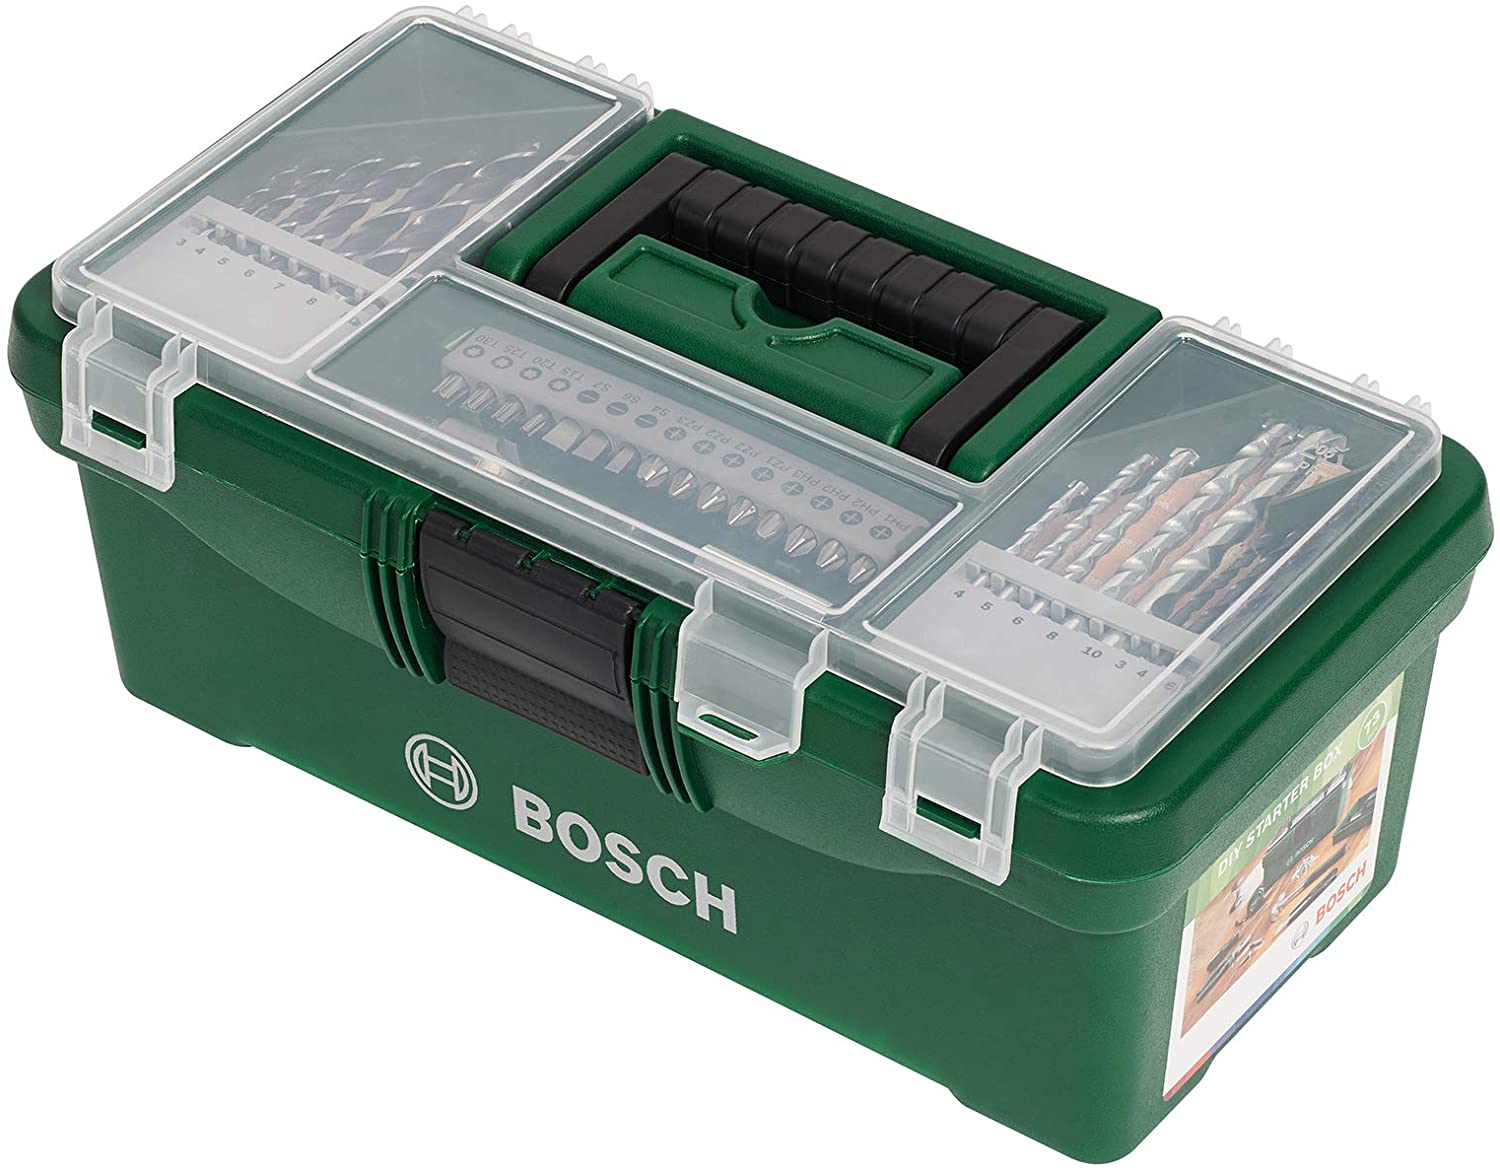 BOSCH DIY STARTER BOX TOOLS KIT 73PCS